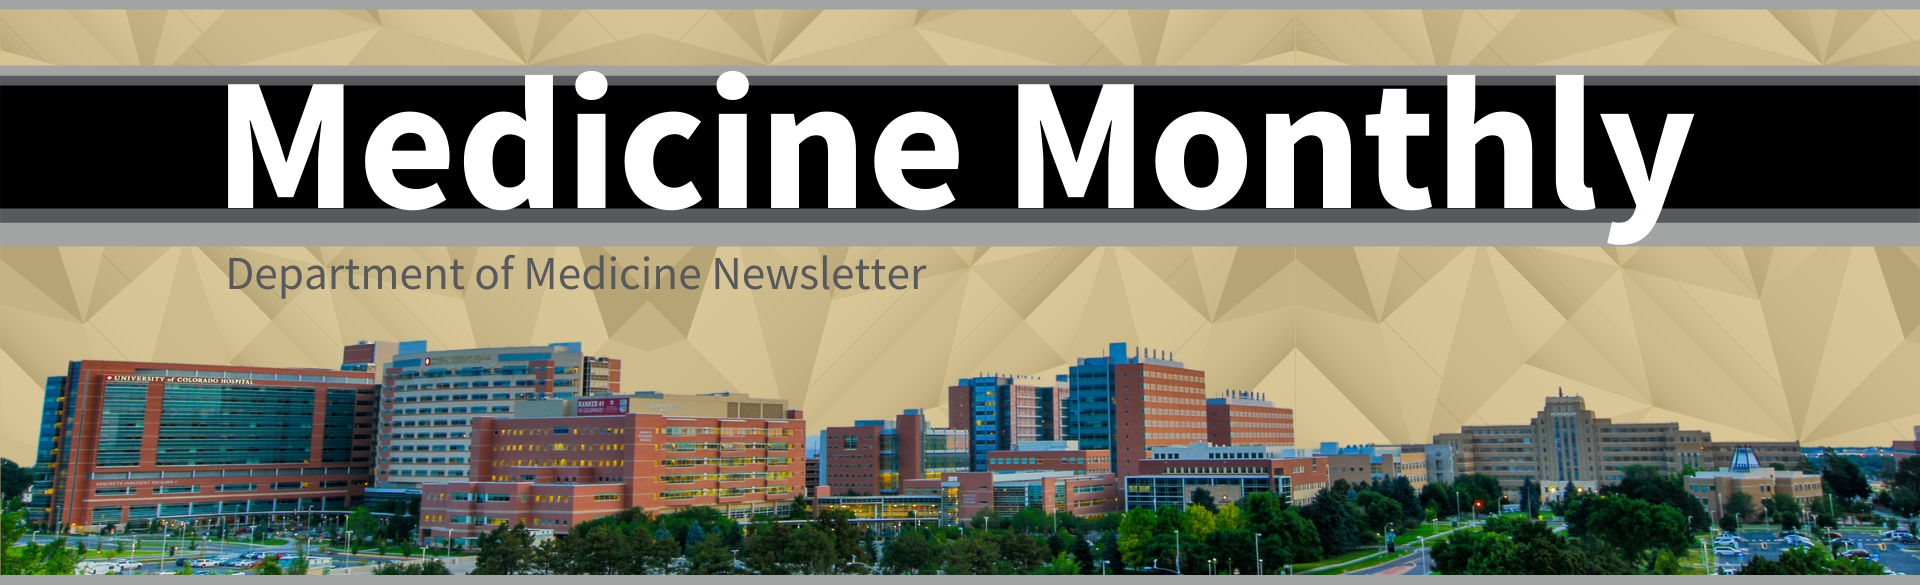 Medicine Monthly—Department of Medicine's newsletter